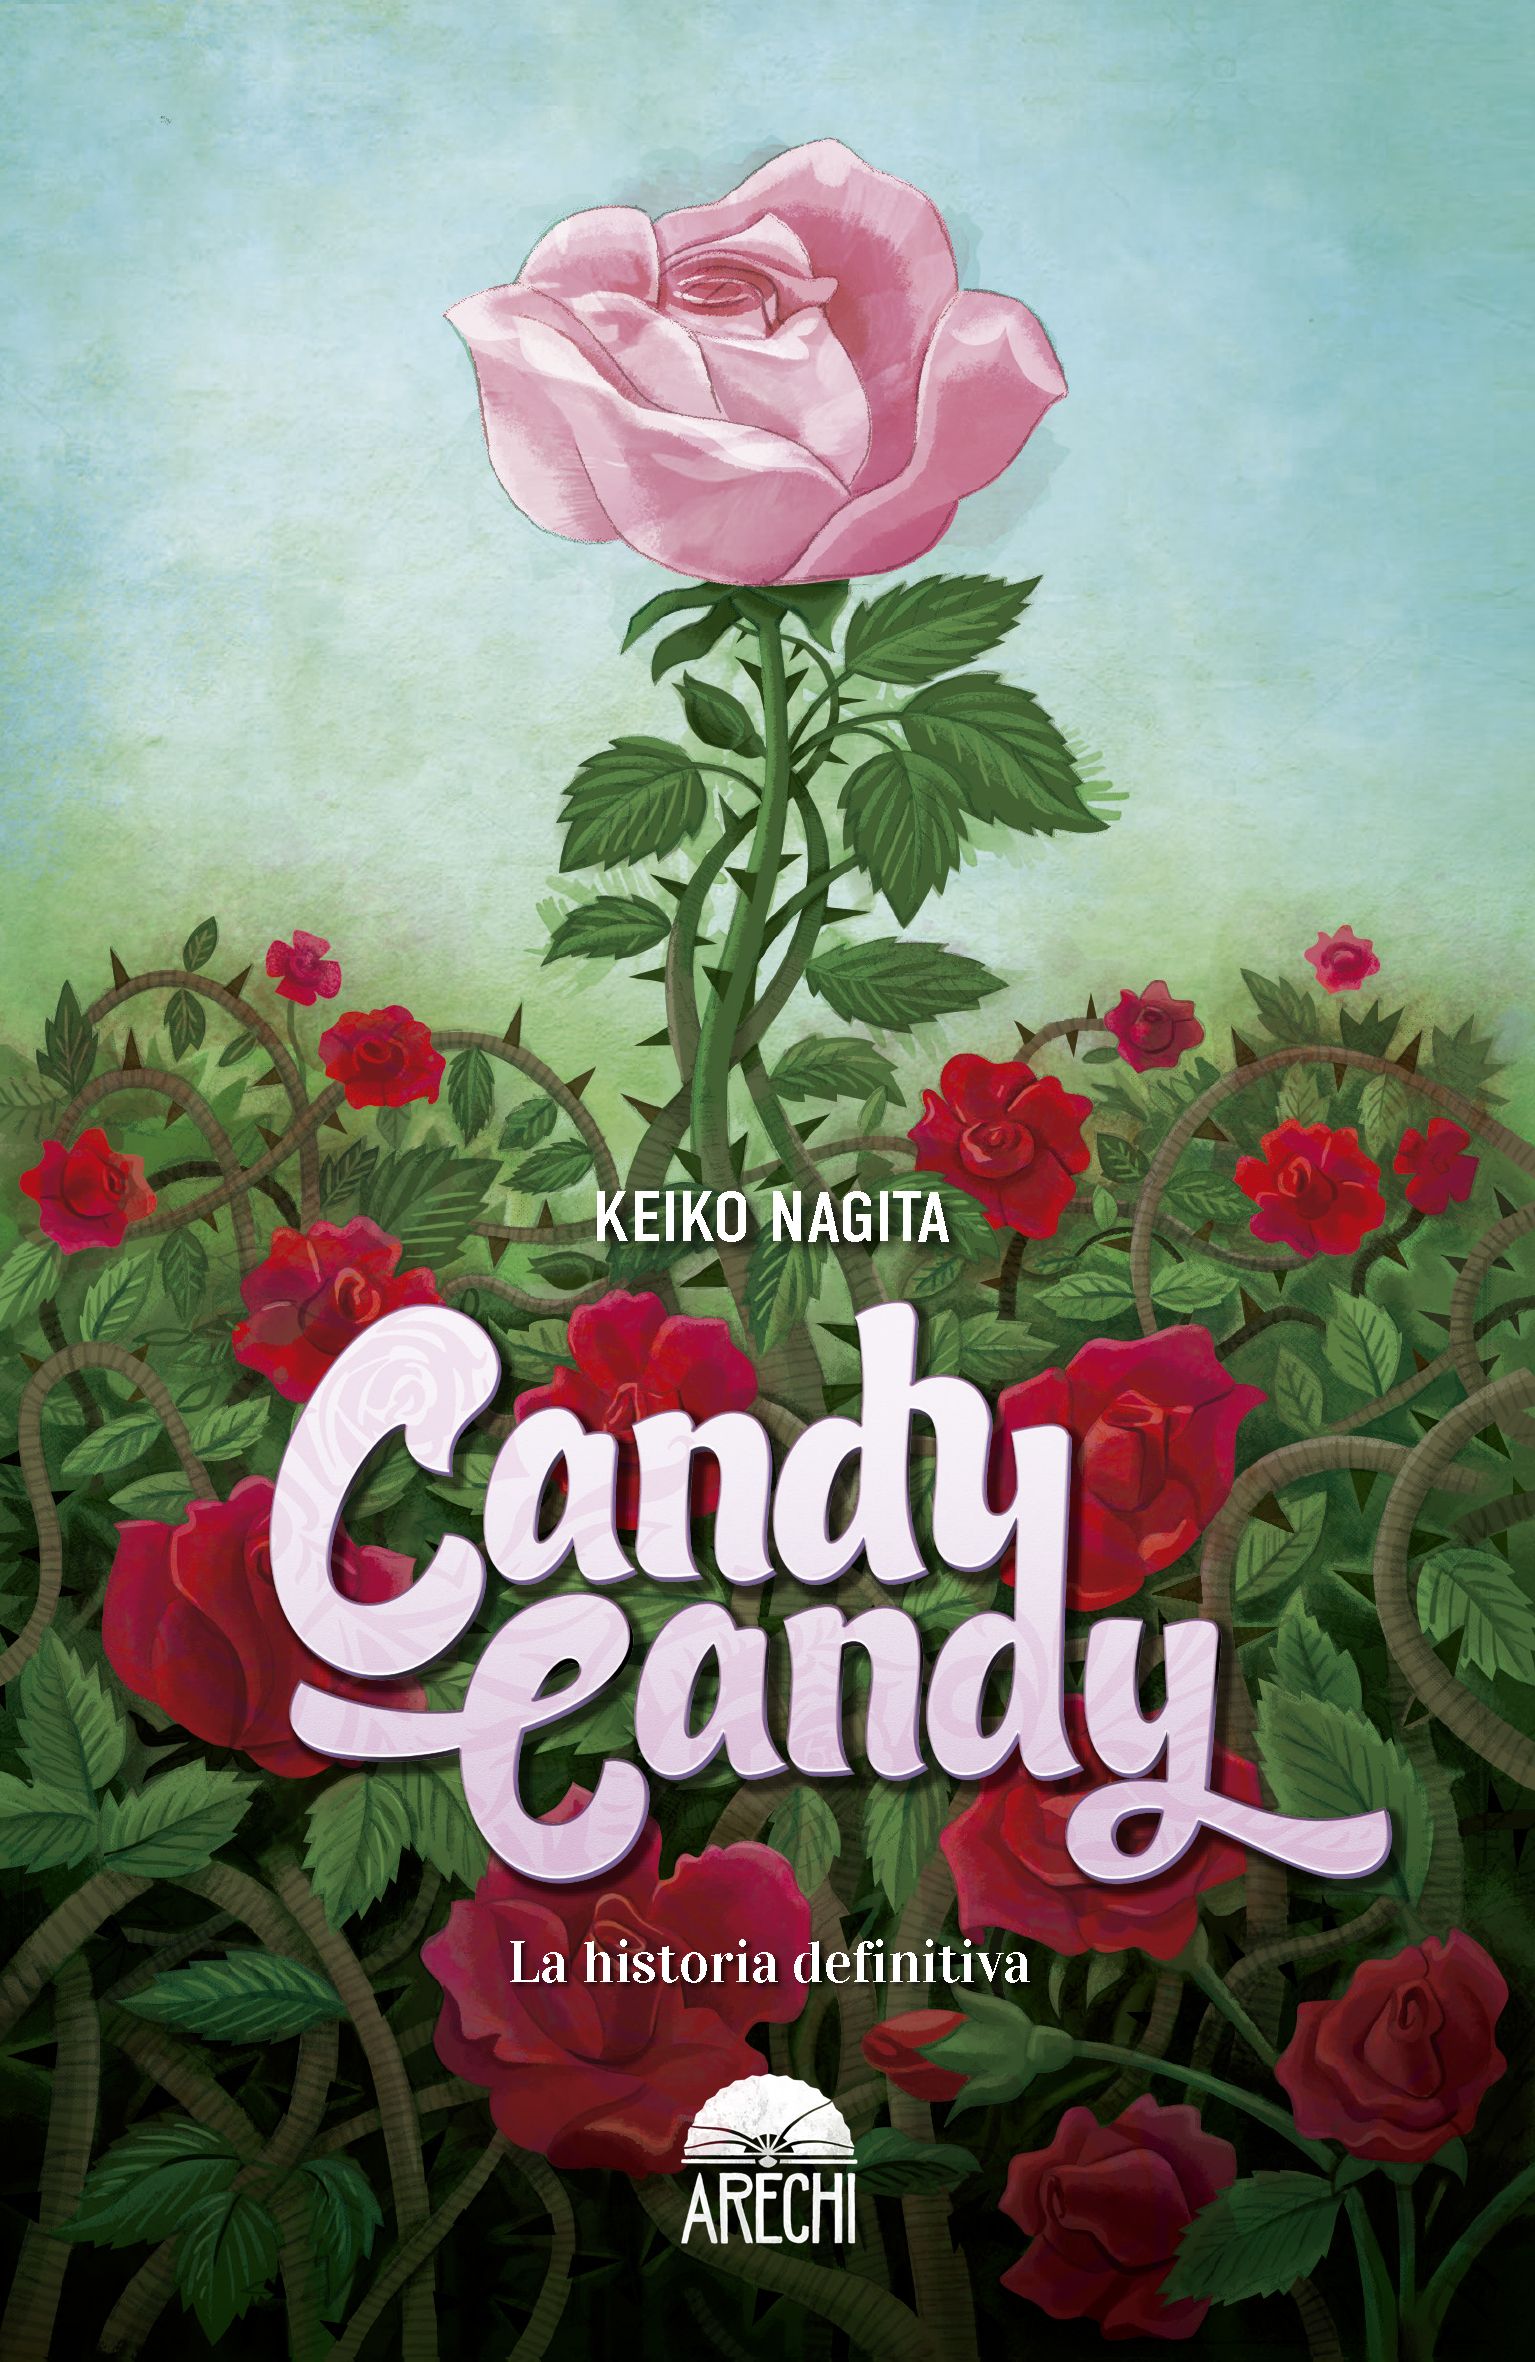 Desvelada la portada de Candy Candy, la historia definitiva - Ramen Para Dos